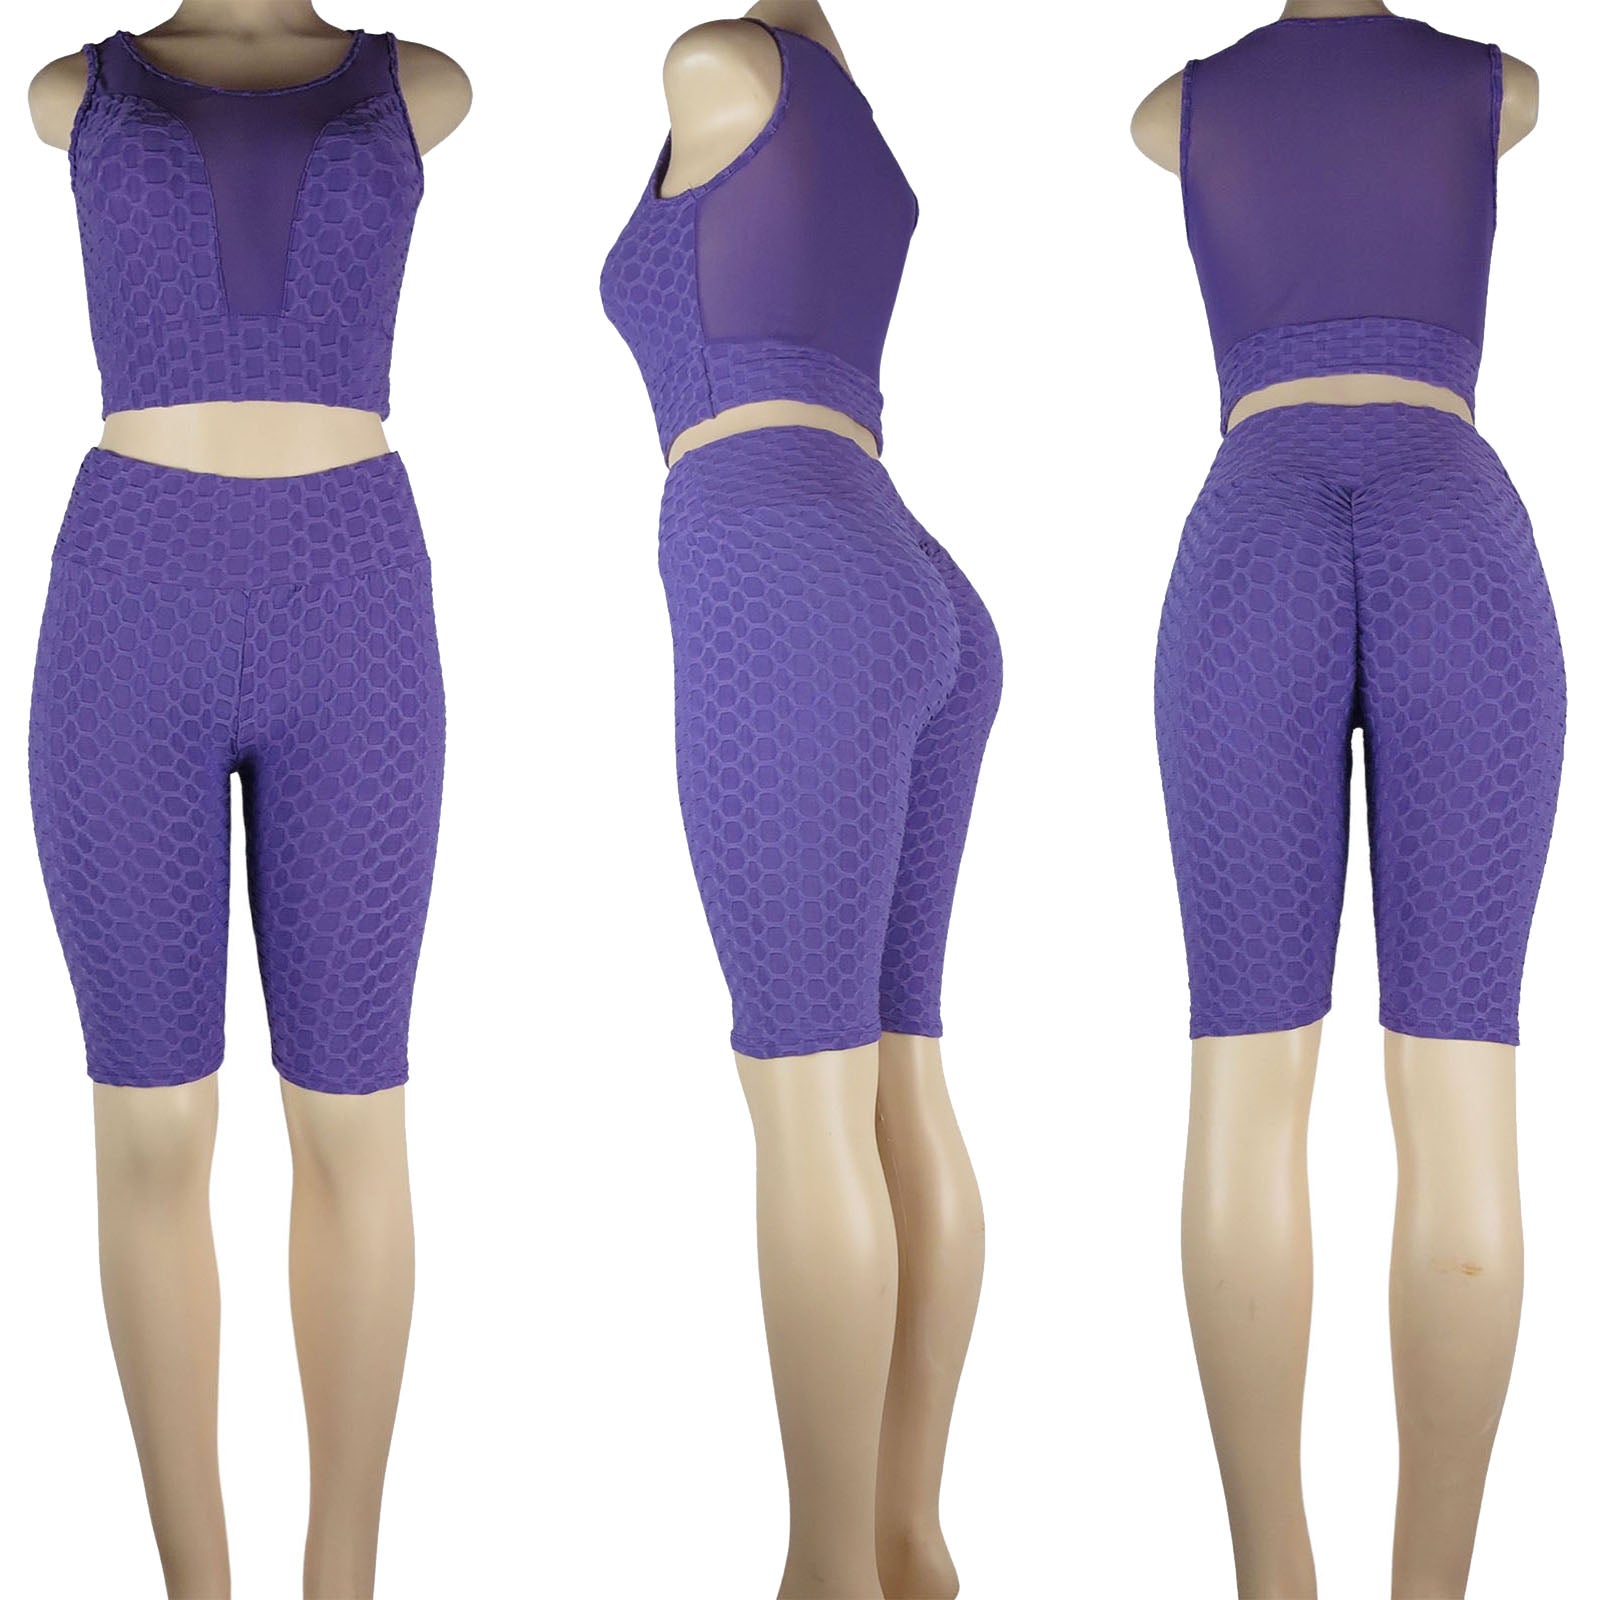 Wholesale TikTok bike shorts set with mesh and scrunch butt bubble design in purple